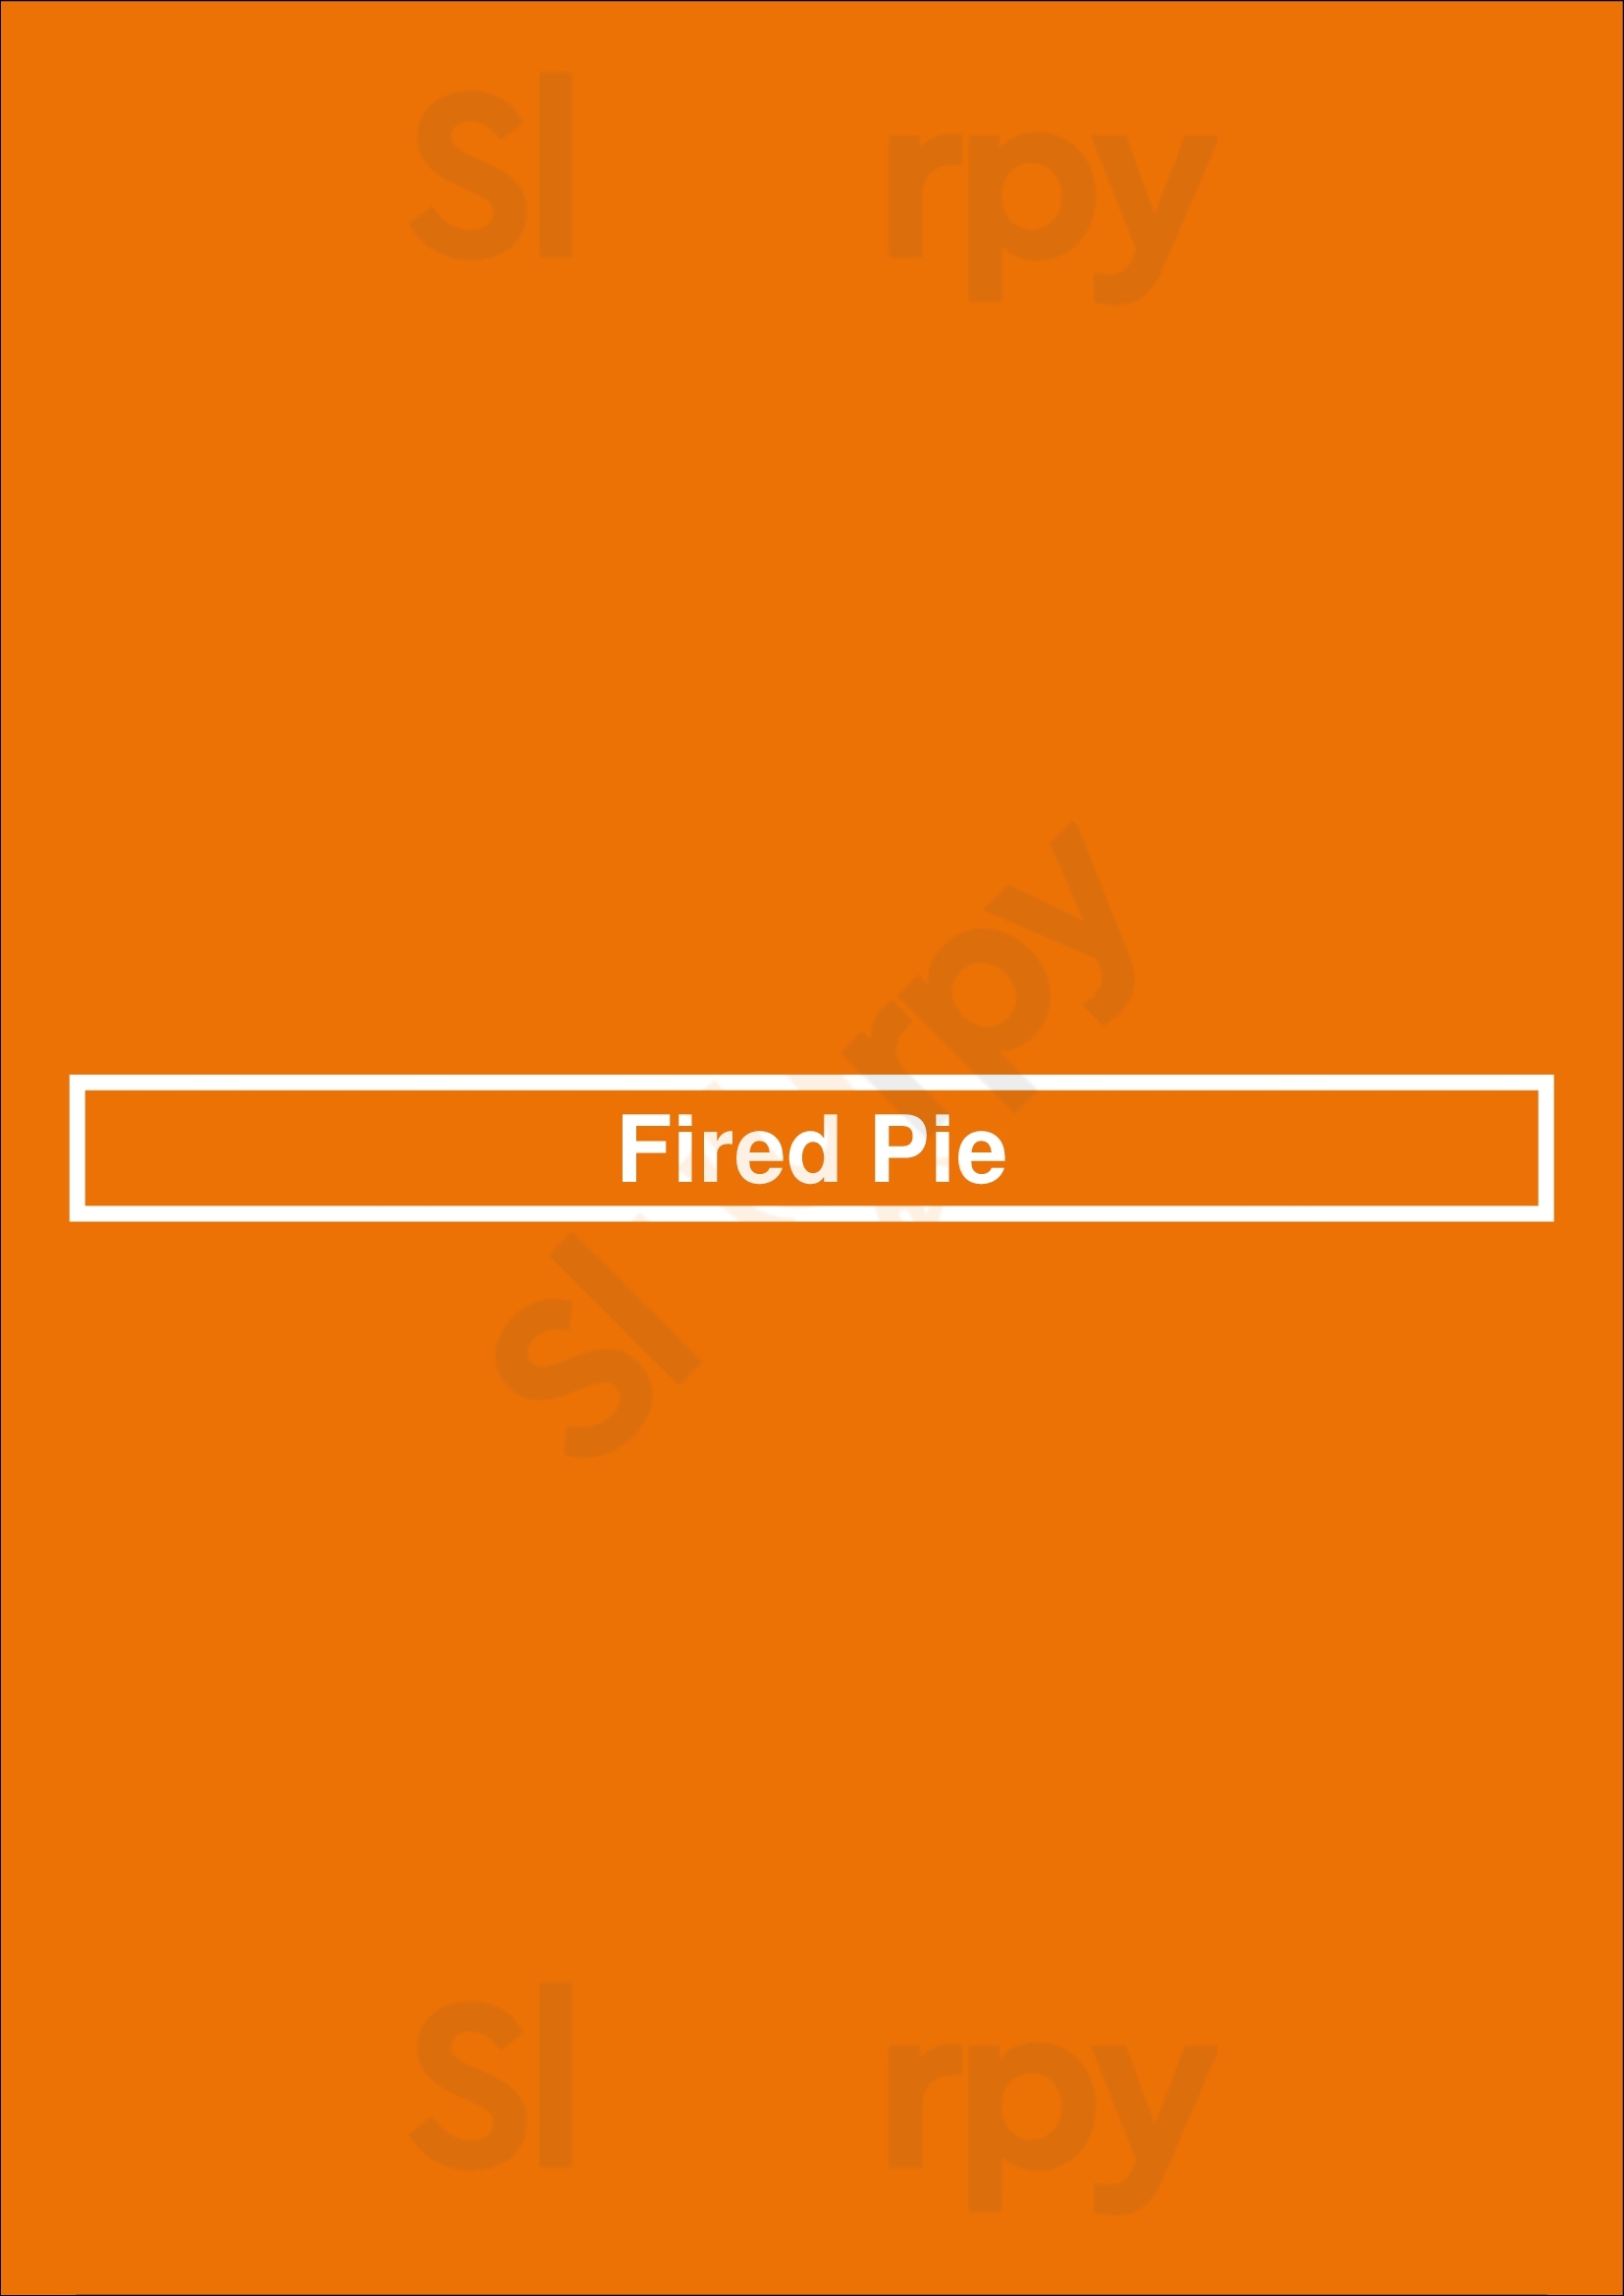 Fired Pie Scottsdale Menu - 1